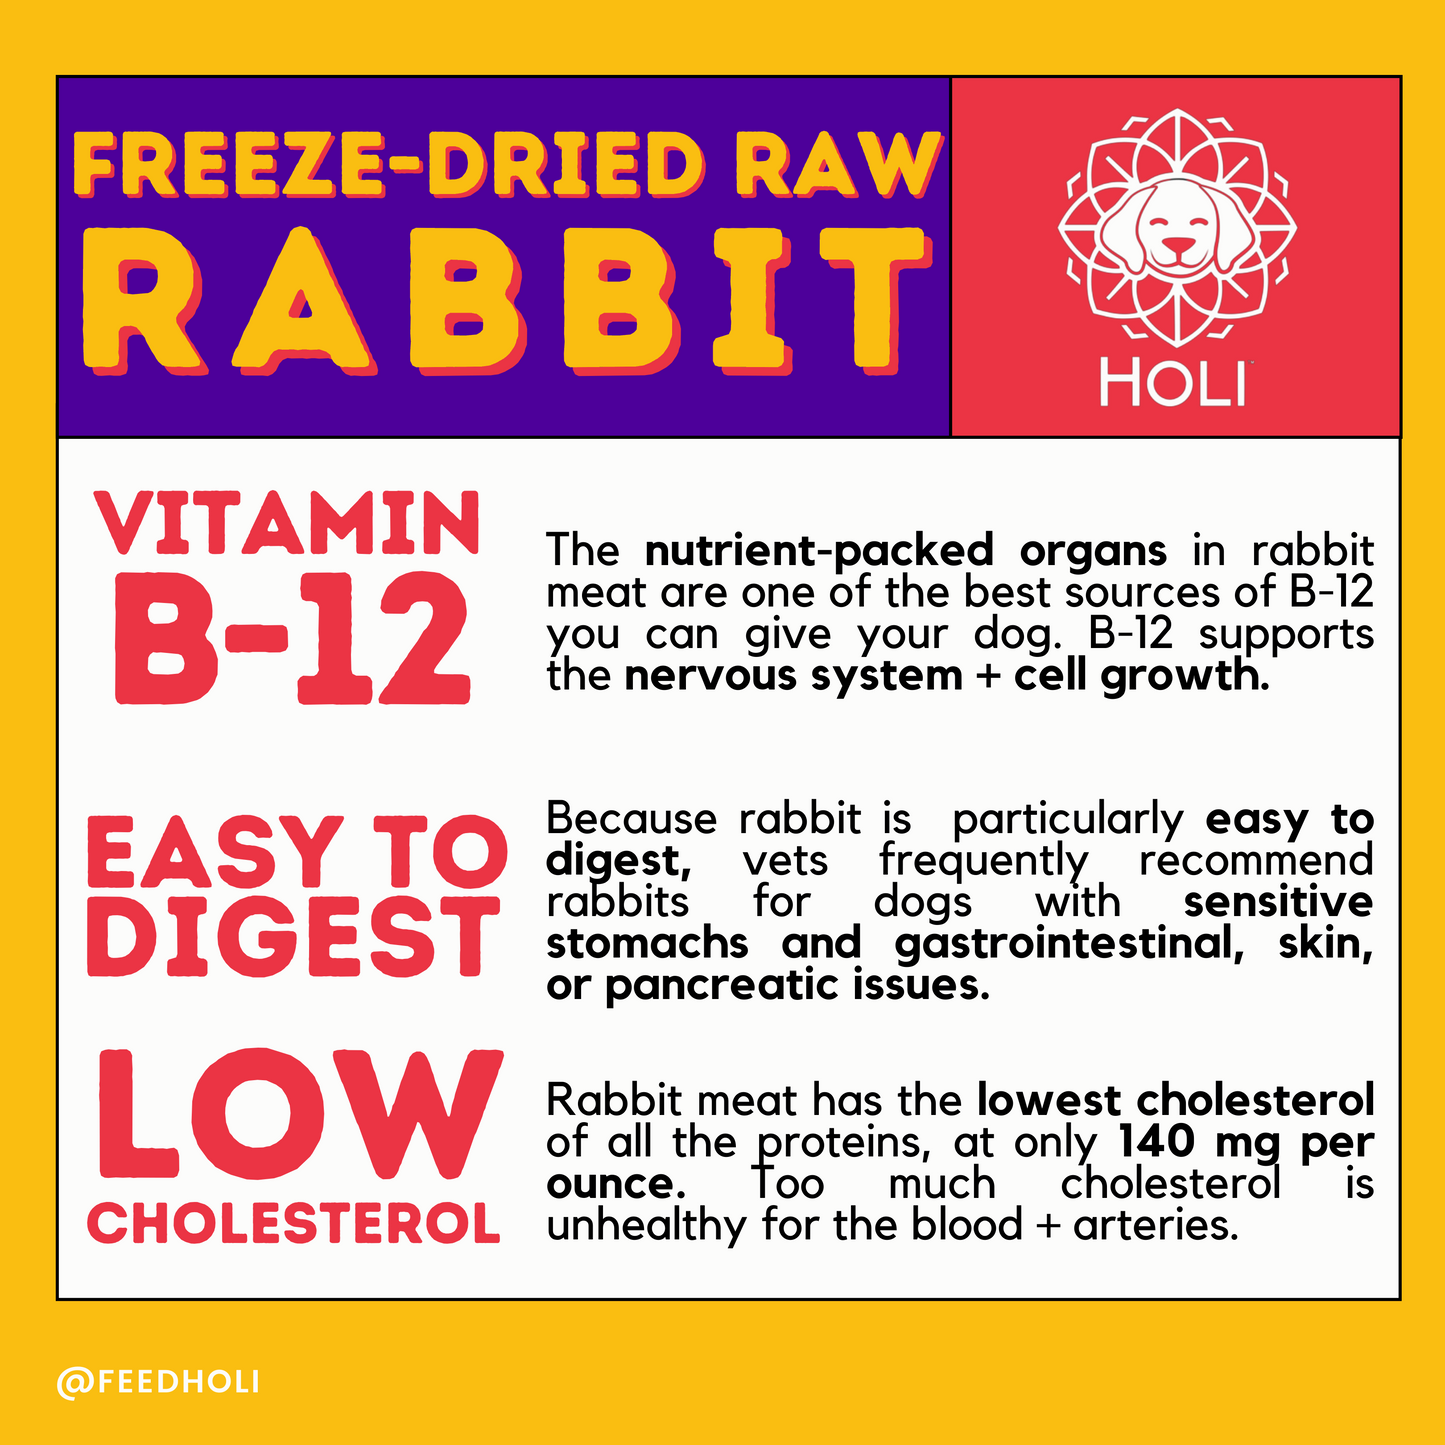 Benefits of freeze-dried raw rabbit infographic 